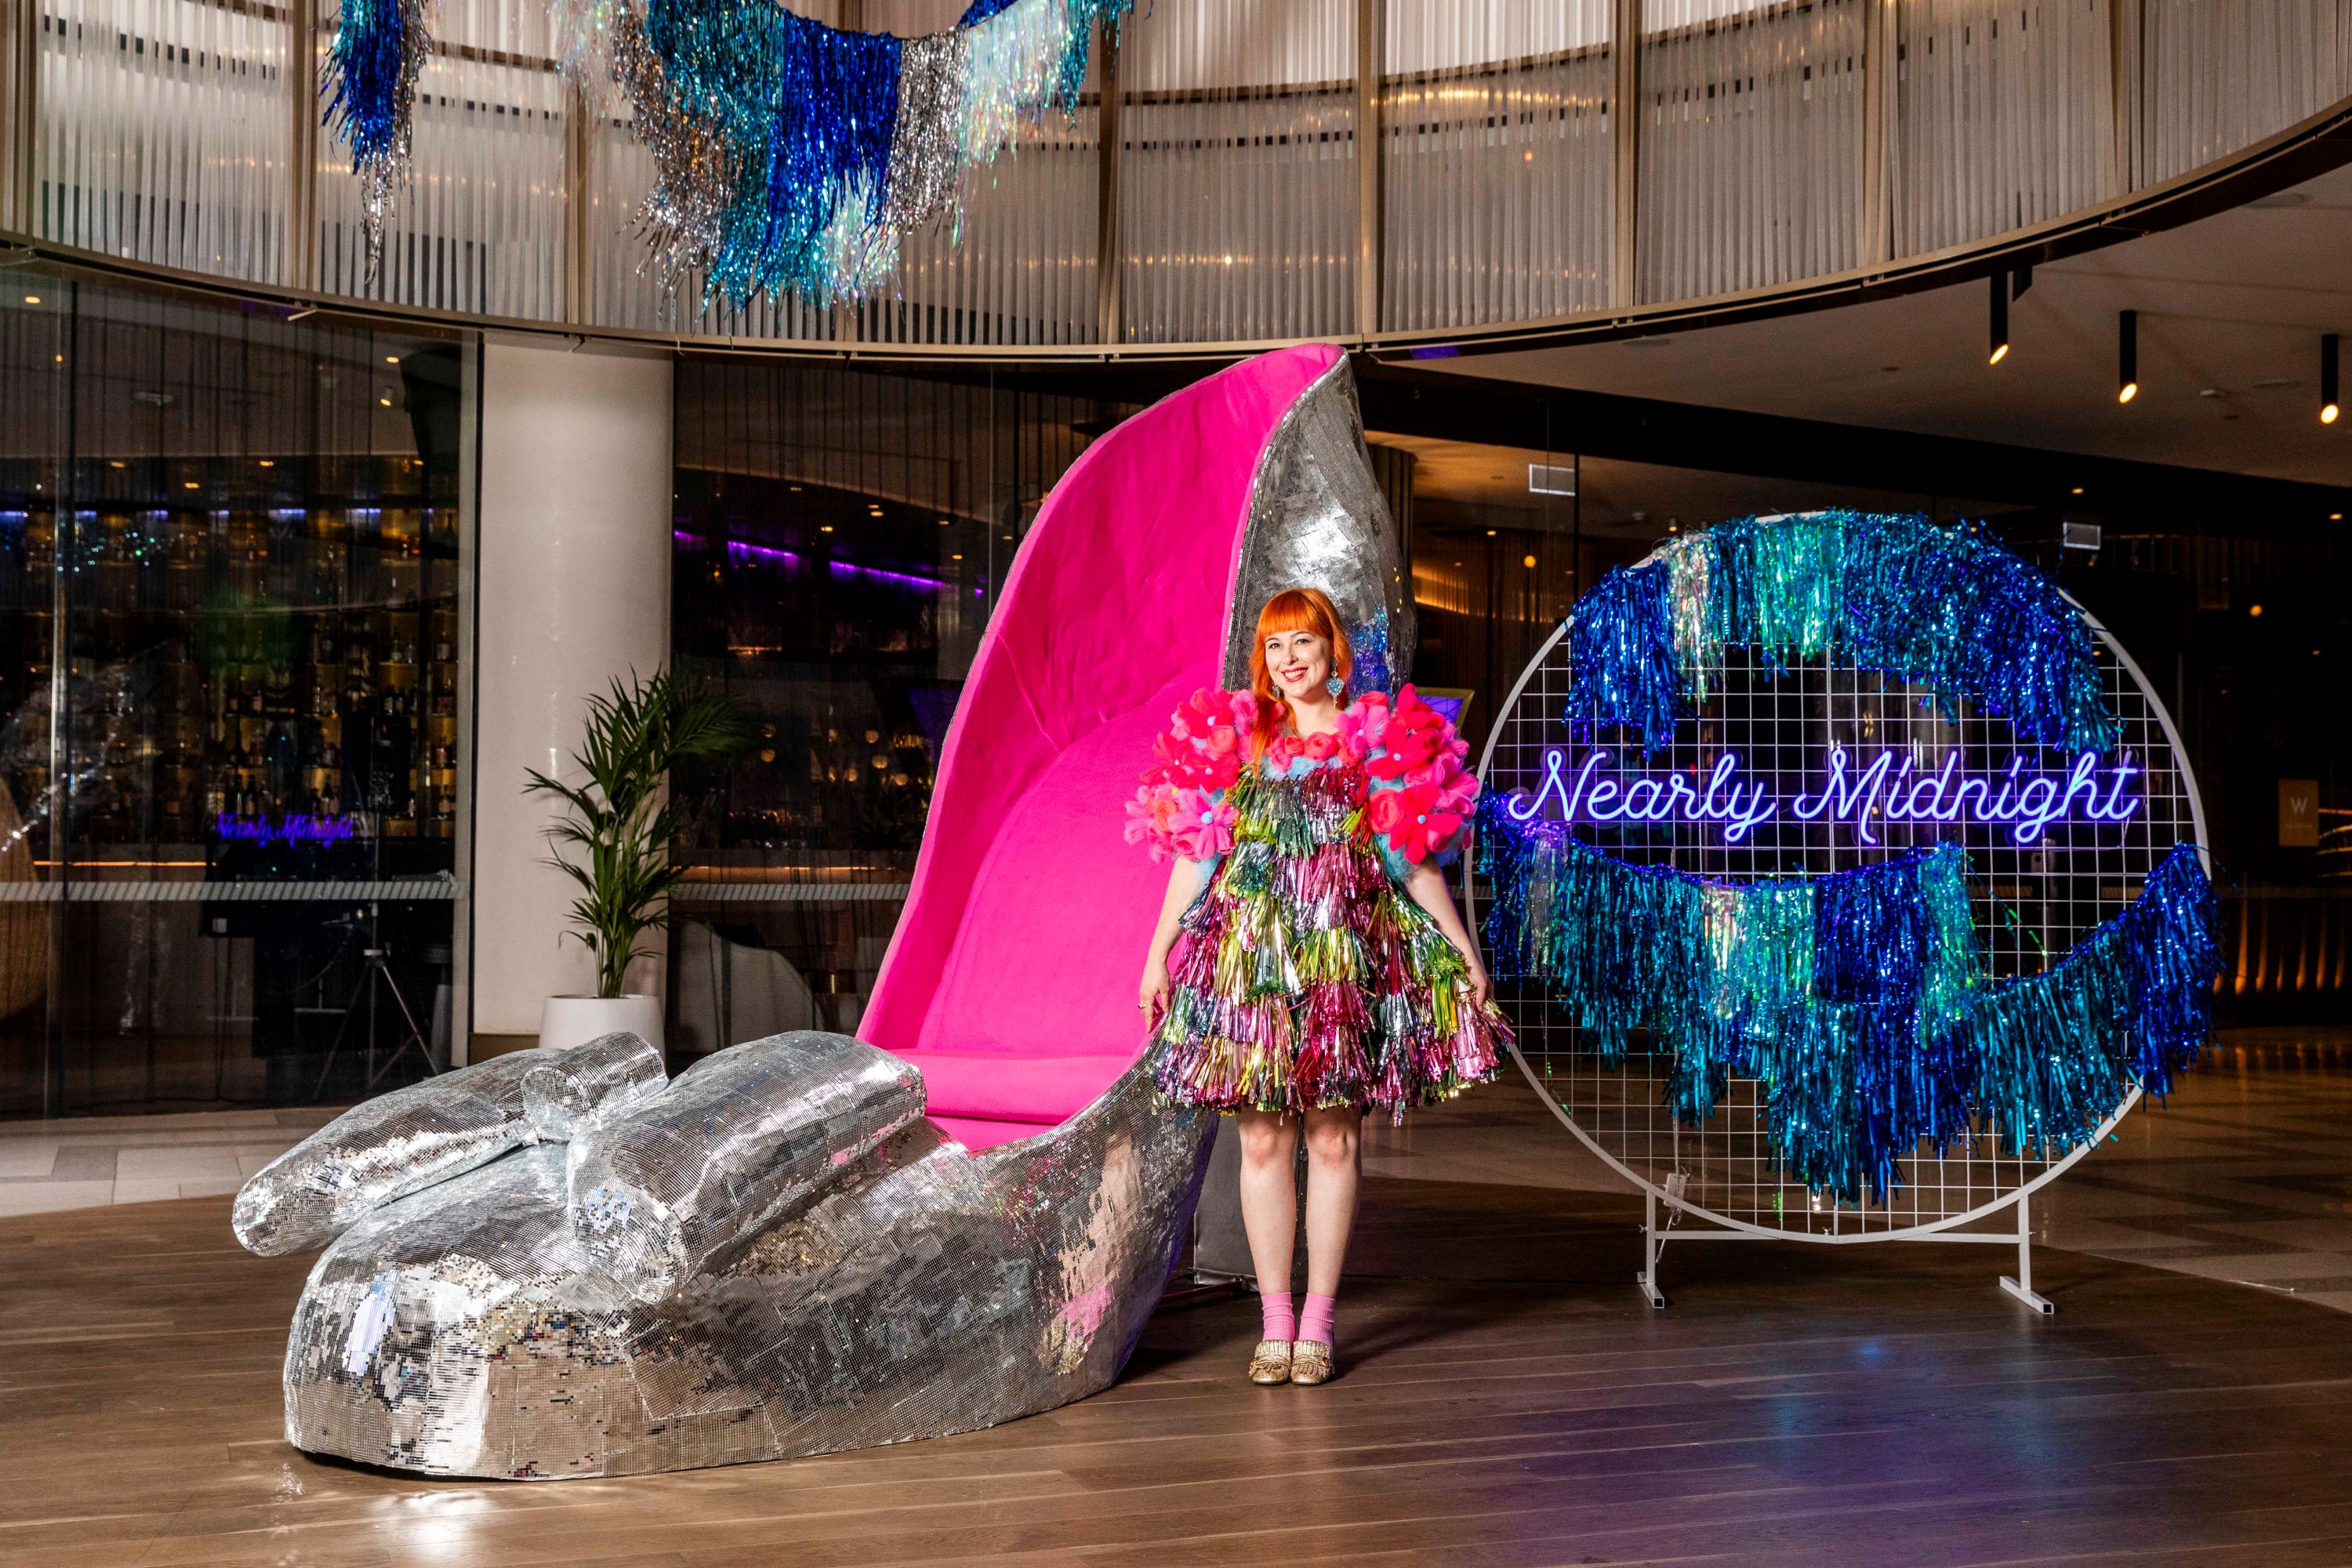 Giant crystal slipper sculpture made by Rachel Burke in Brisbane Quarter